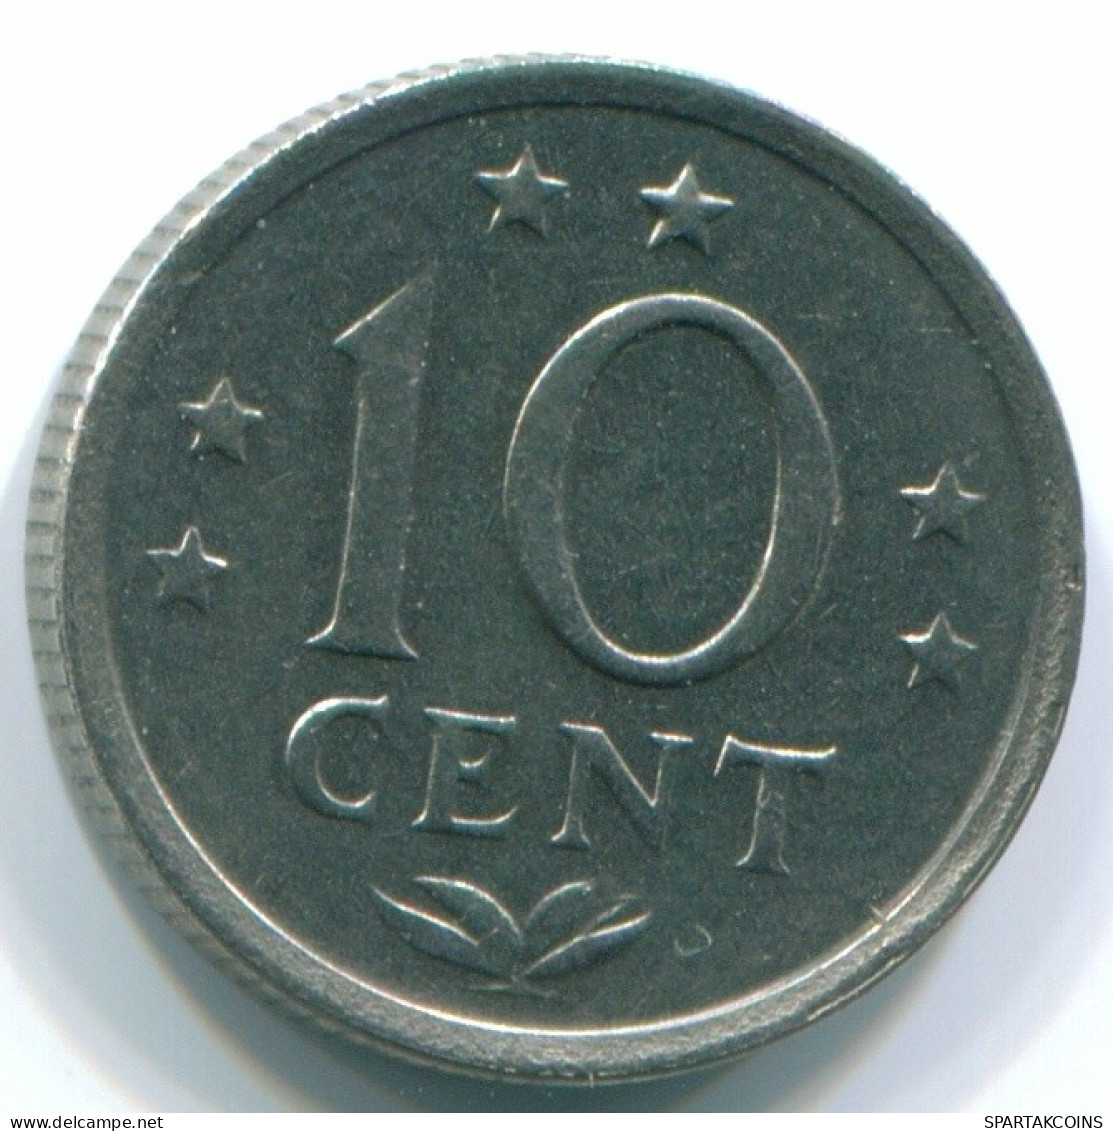 10 CENTS 1970 NIEDERLÄNDISCHE ANTILLEN Nickel Koloniale Münze #S13337.D.A - Netherlands Antilles